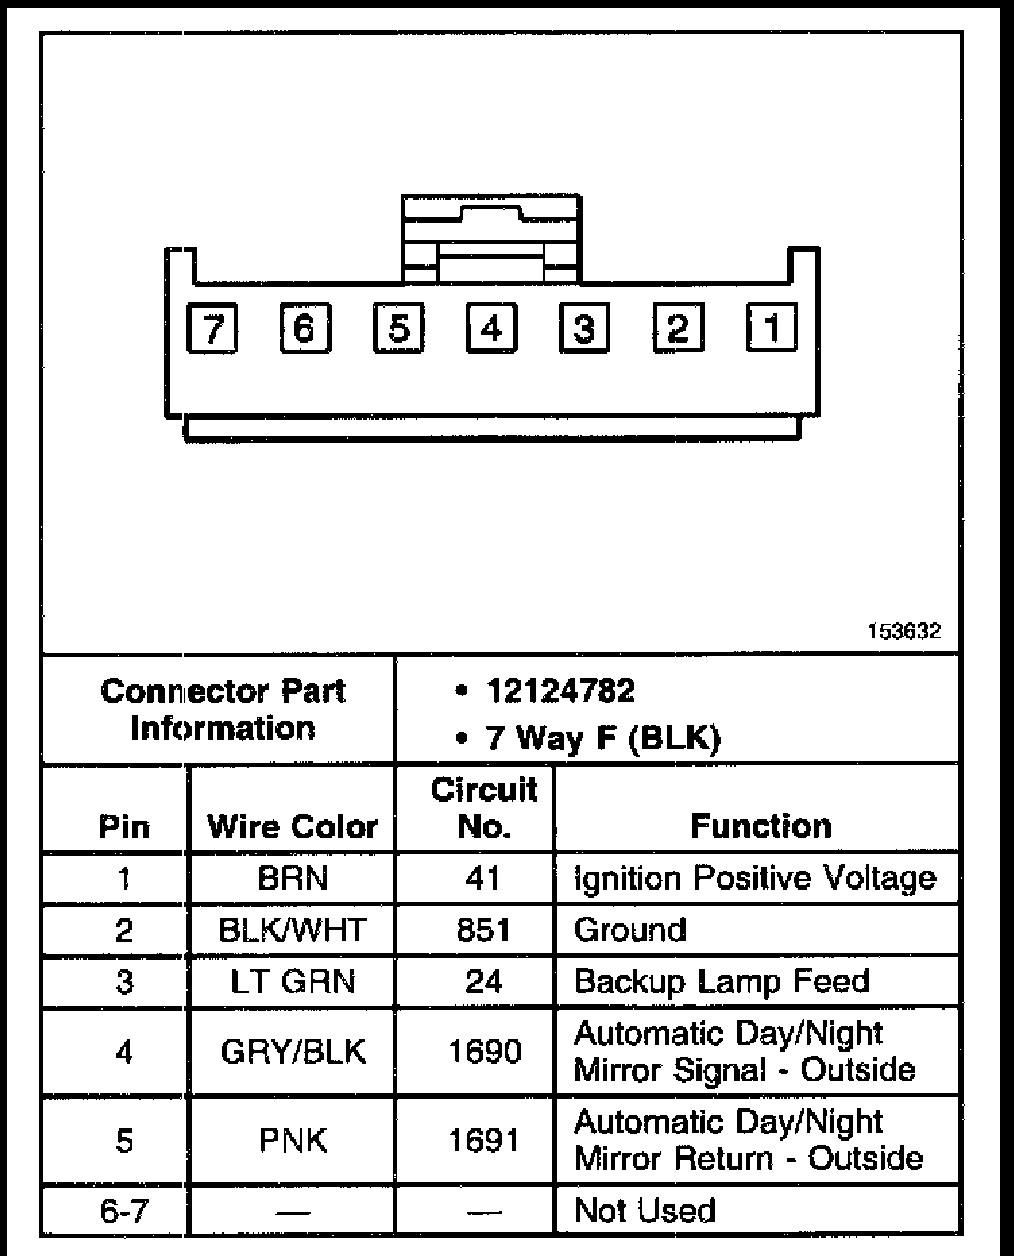 gentex-177 wiring diagram